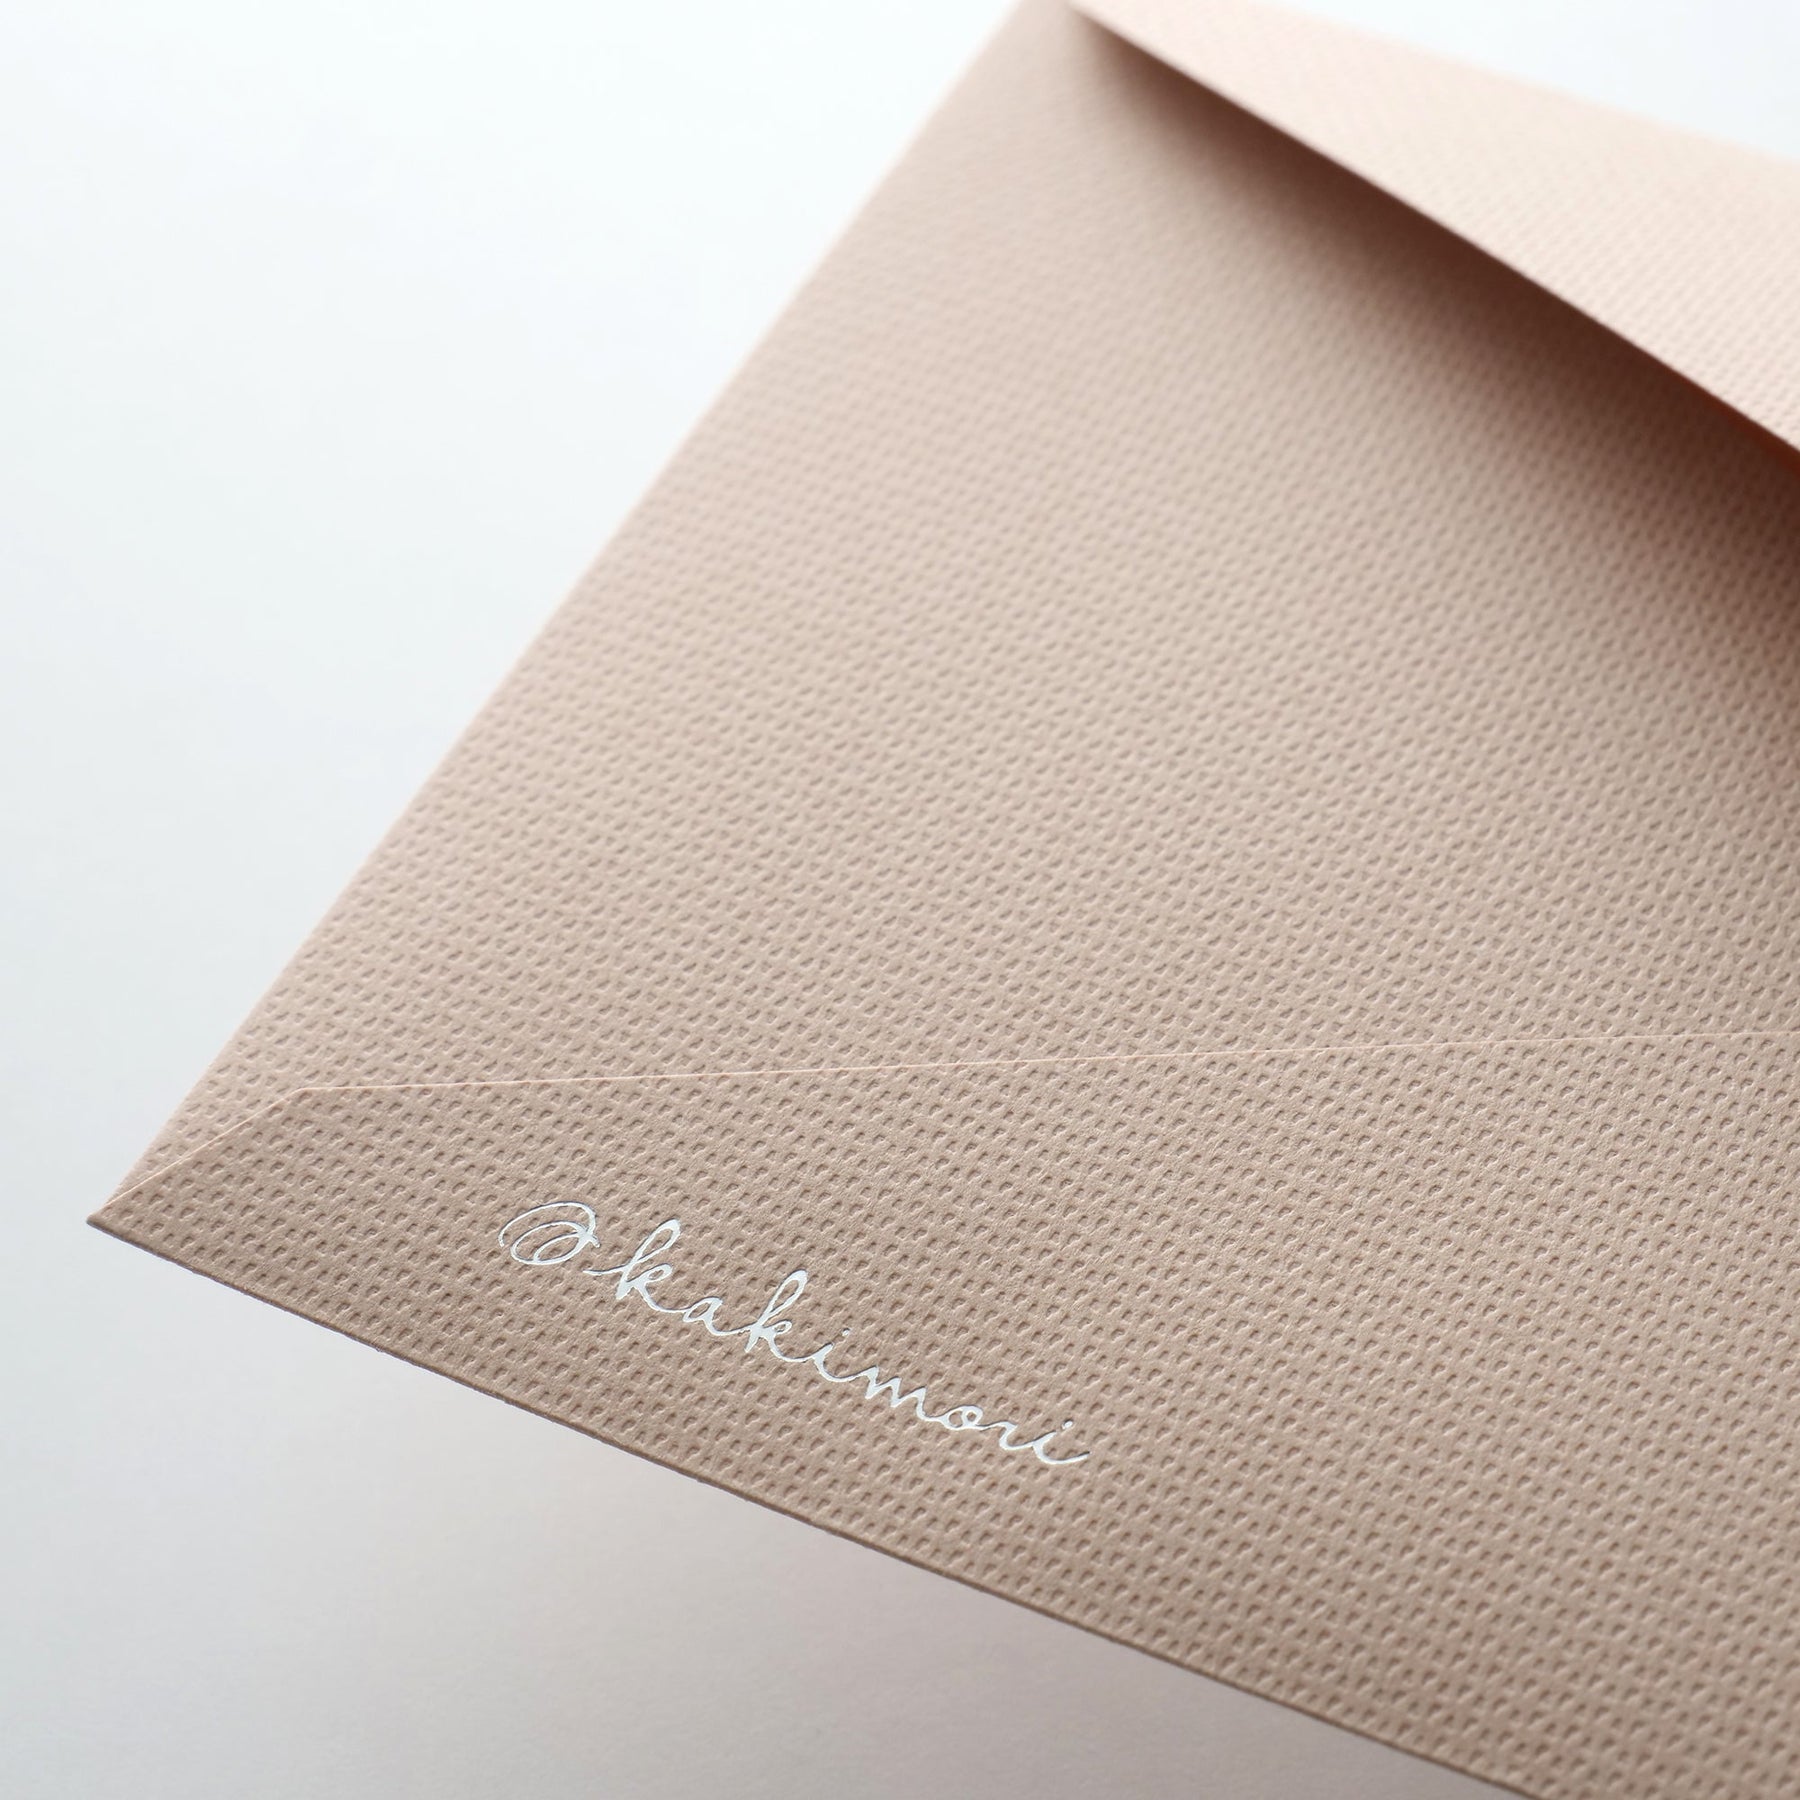 Kakimori Envelope Set